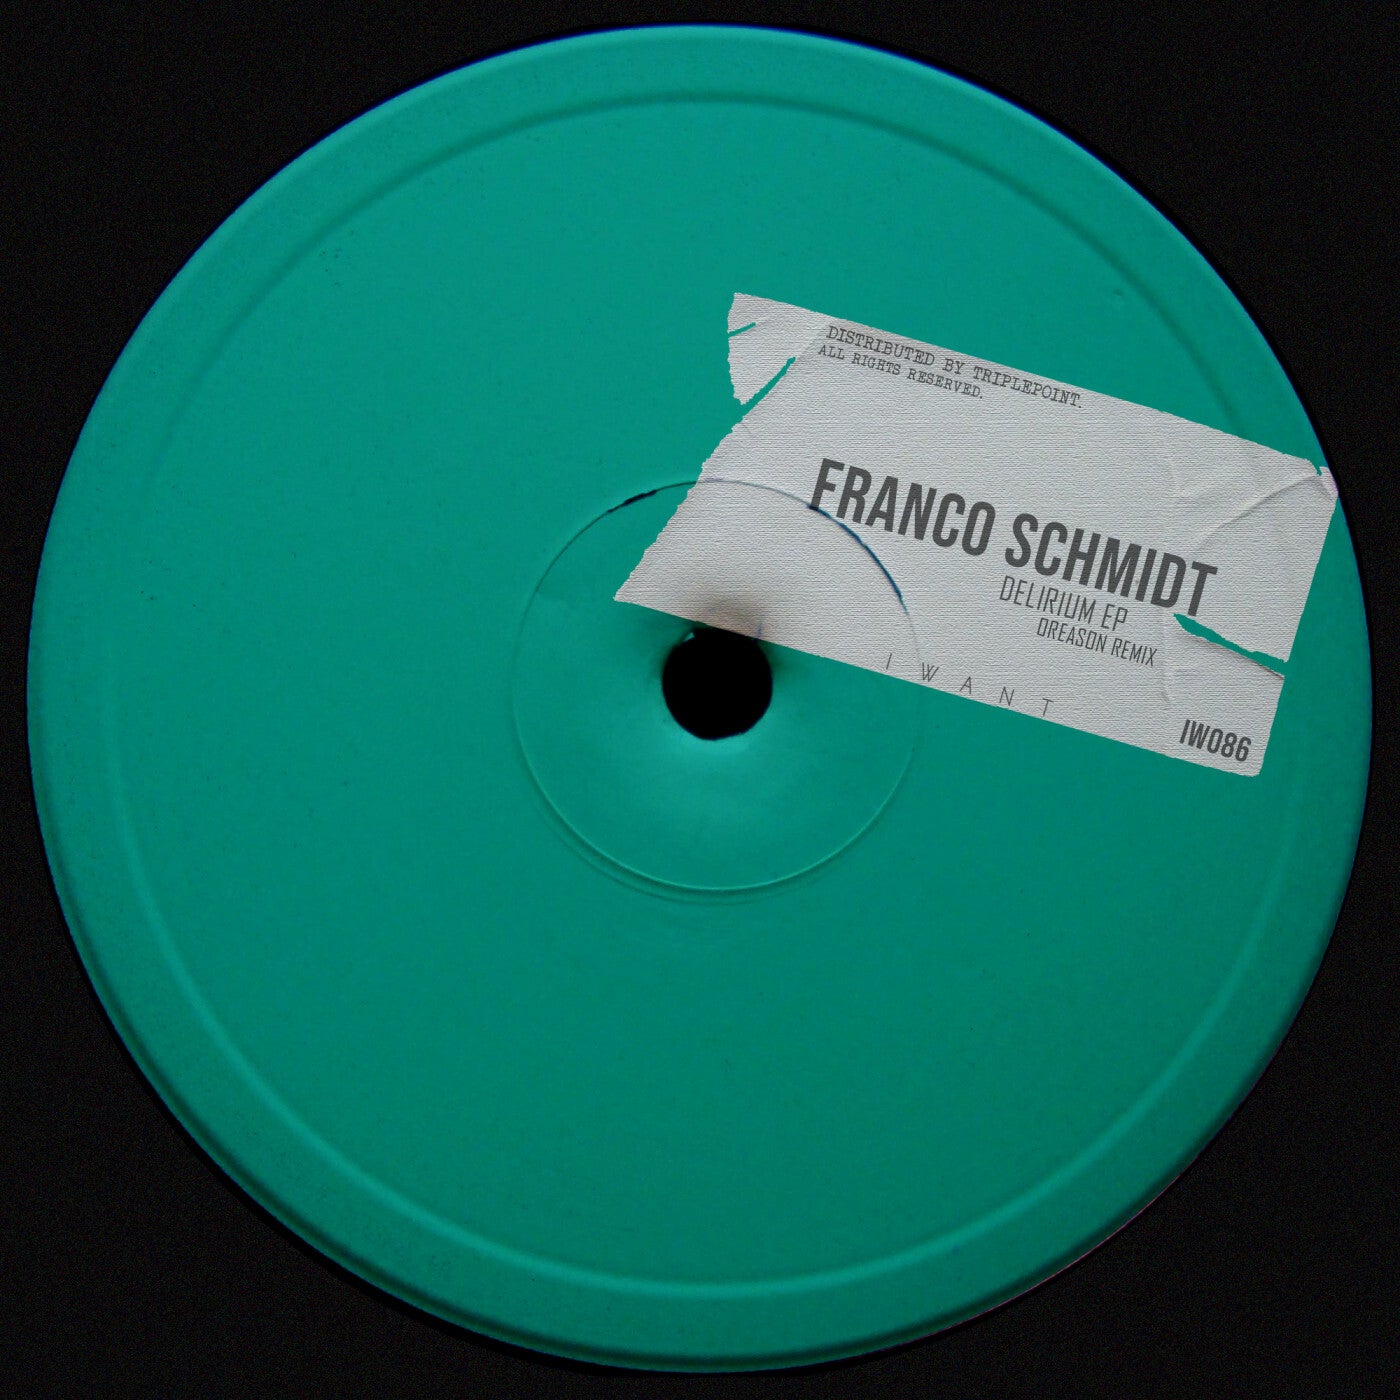 Franco Schmidt – Delirium EP [IW086]